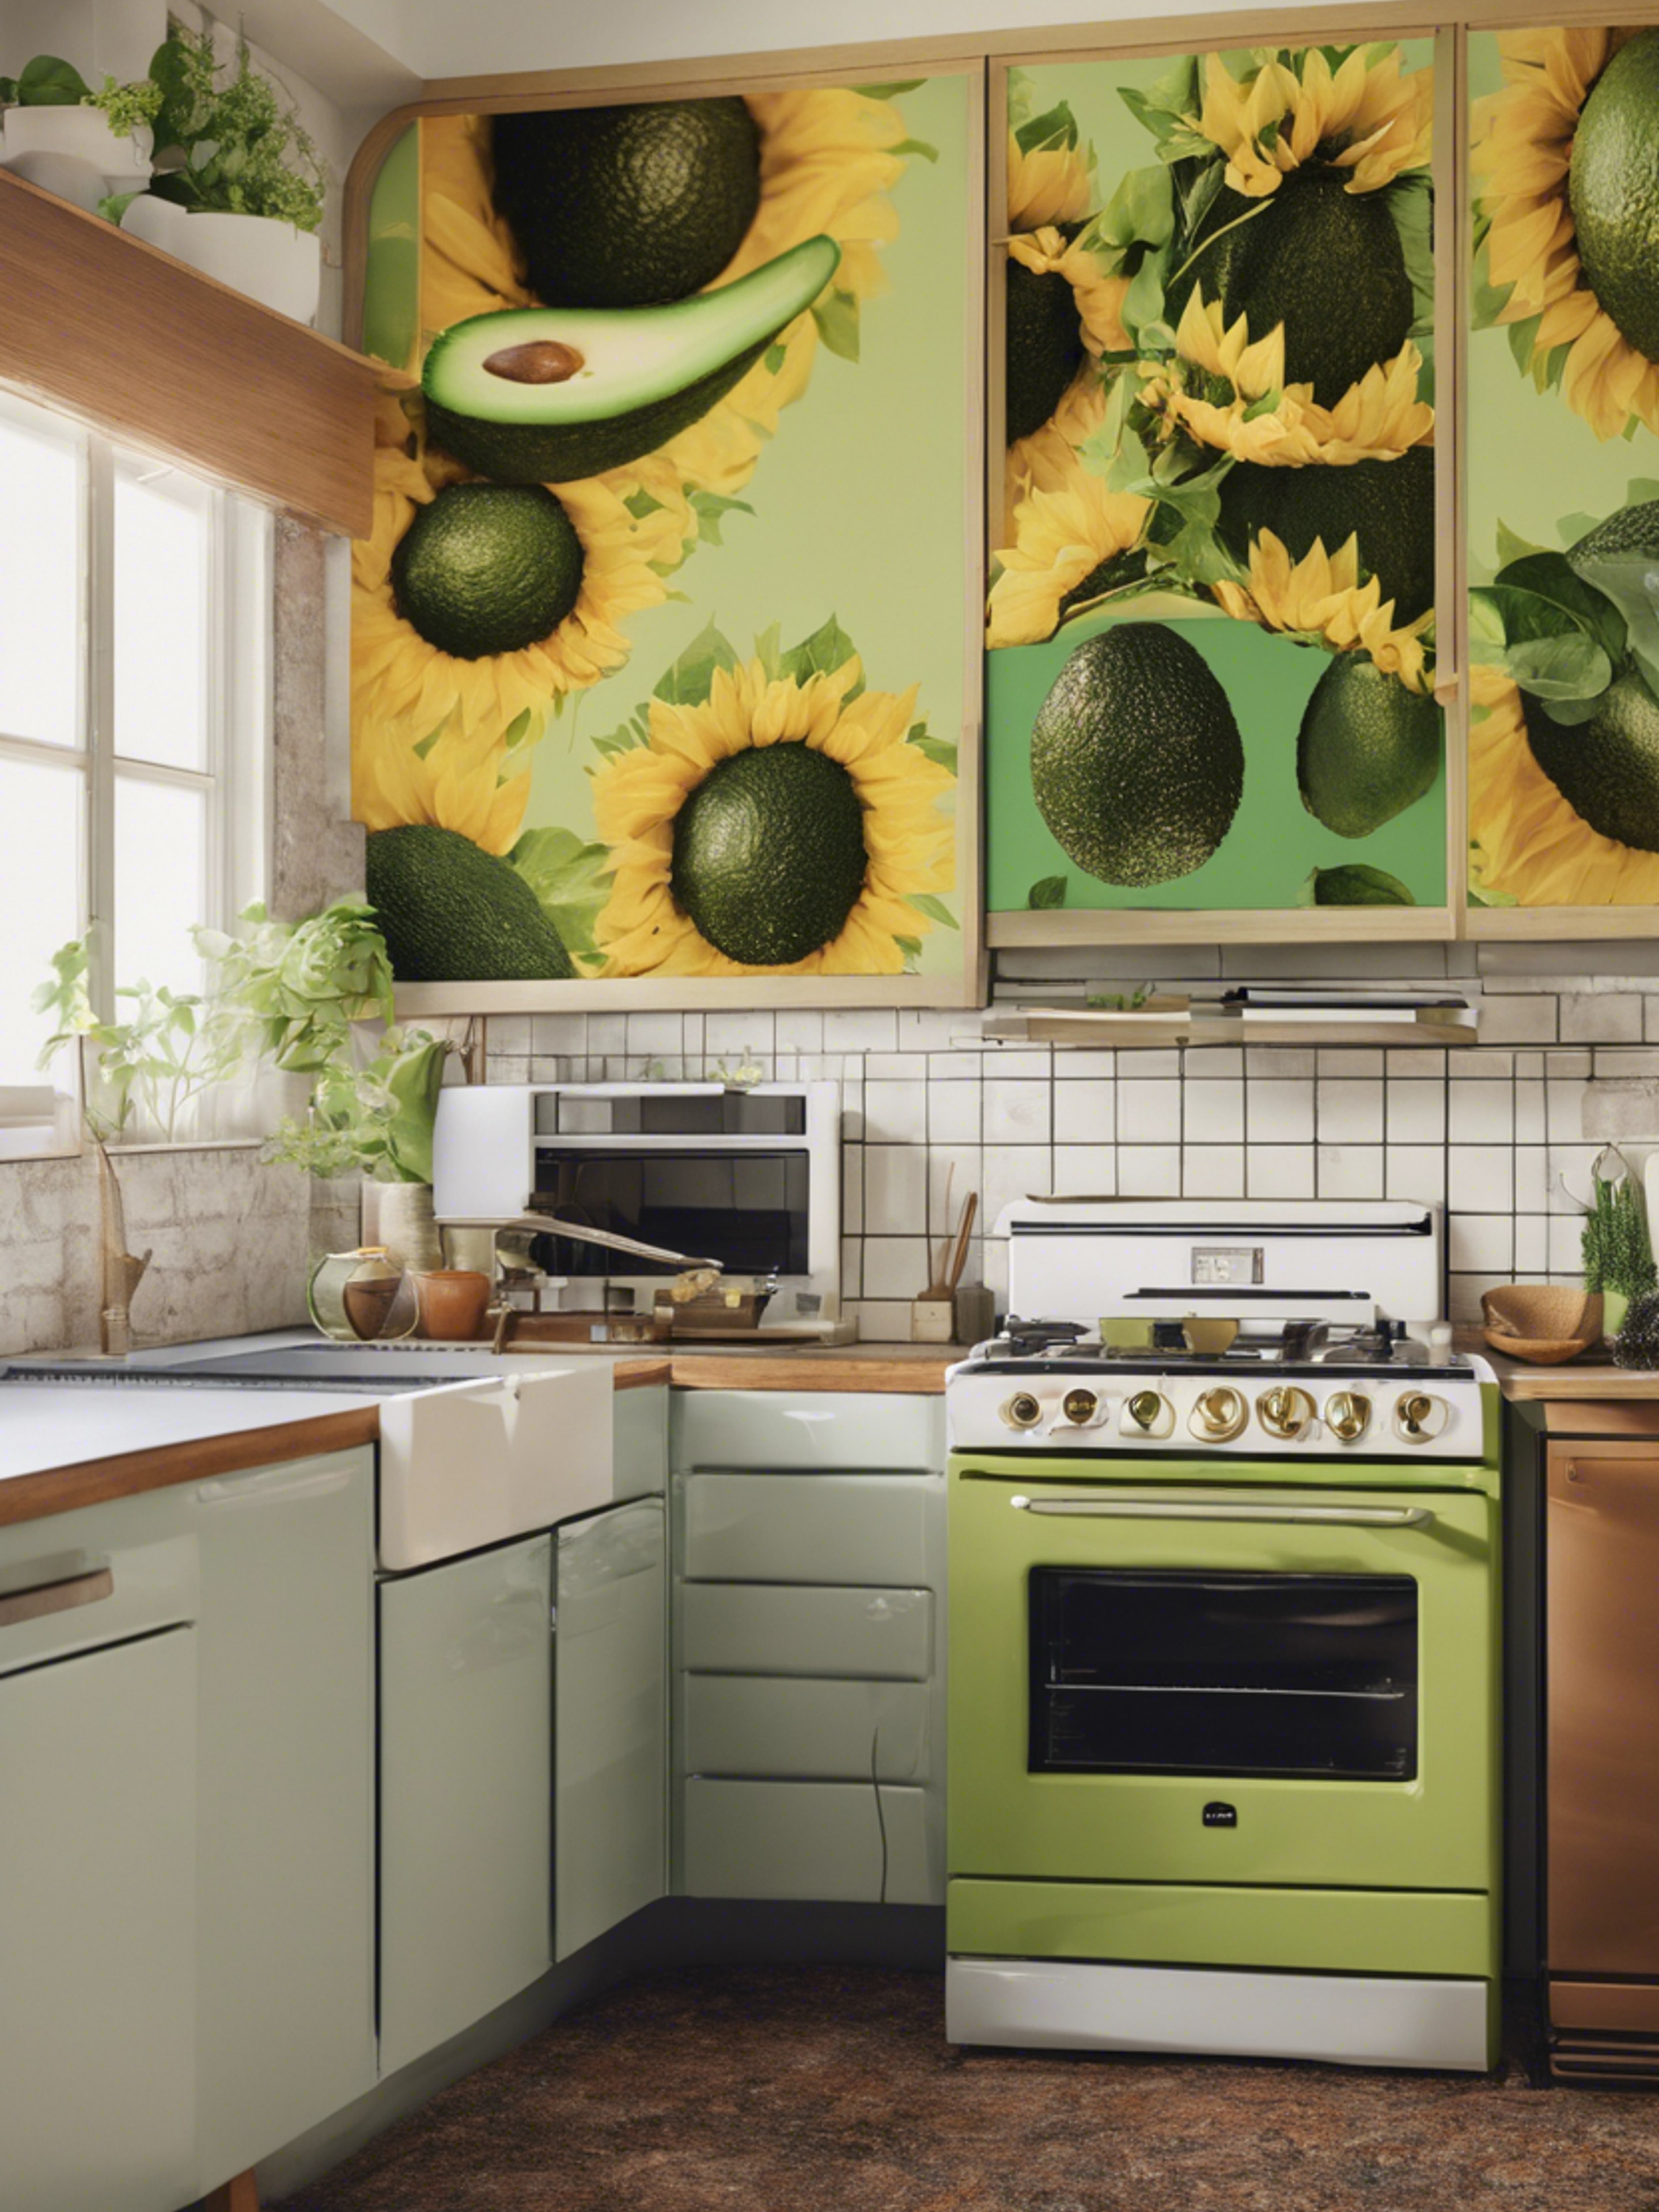 A 70s kitchen with avocado green appliances and oversized sunflower prints Дэлгэцийн зураг[58674ee3cd464da7b0a1]